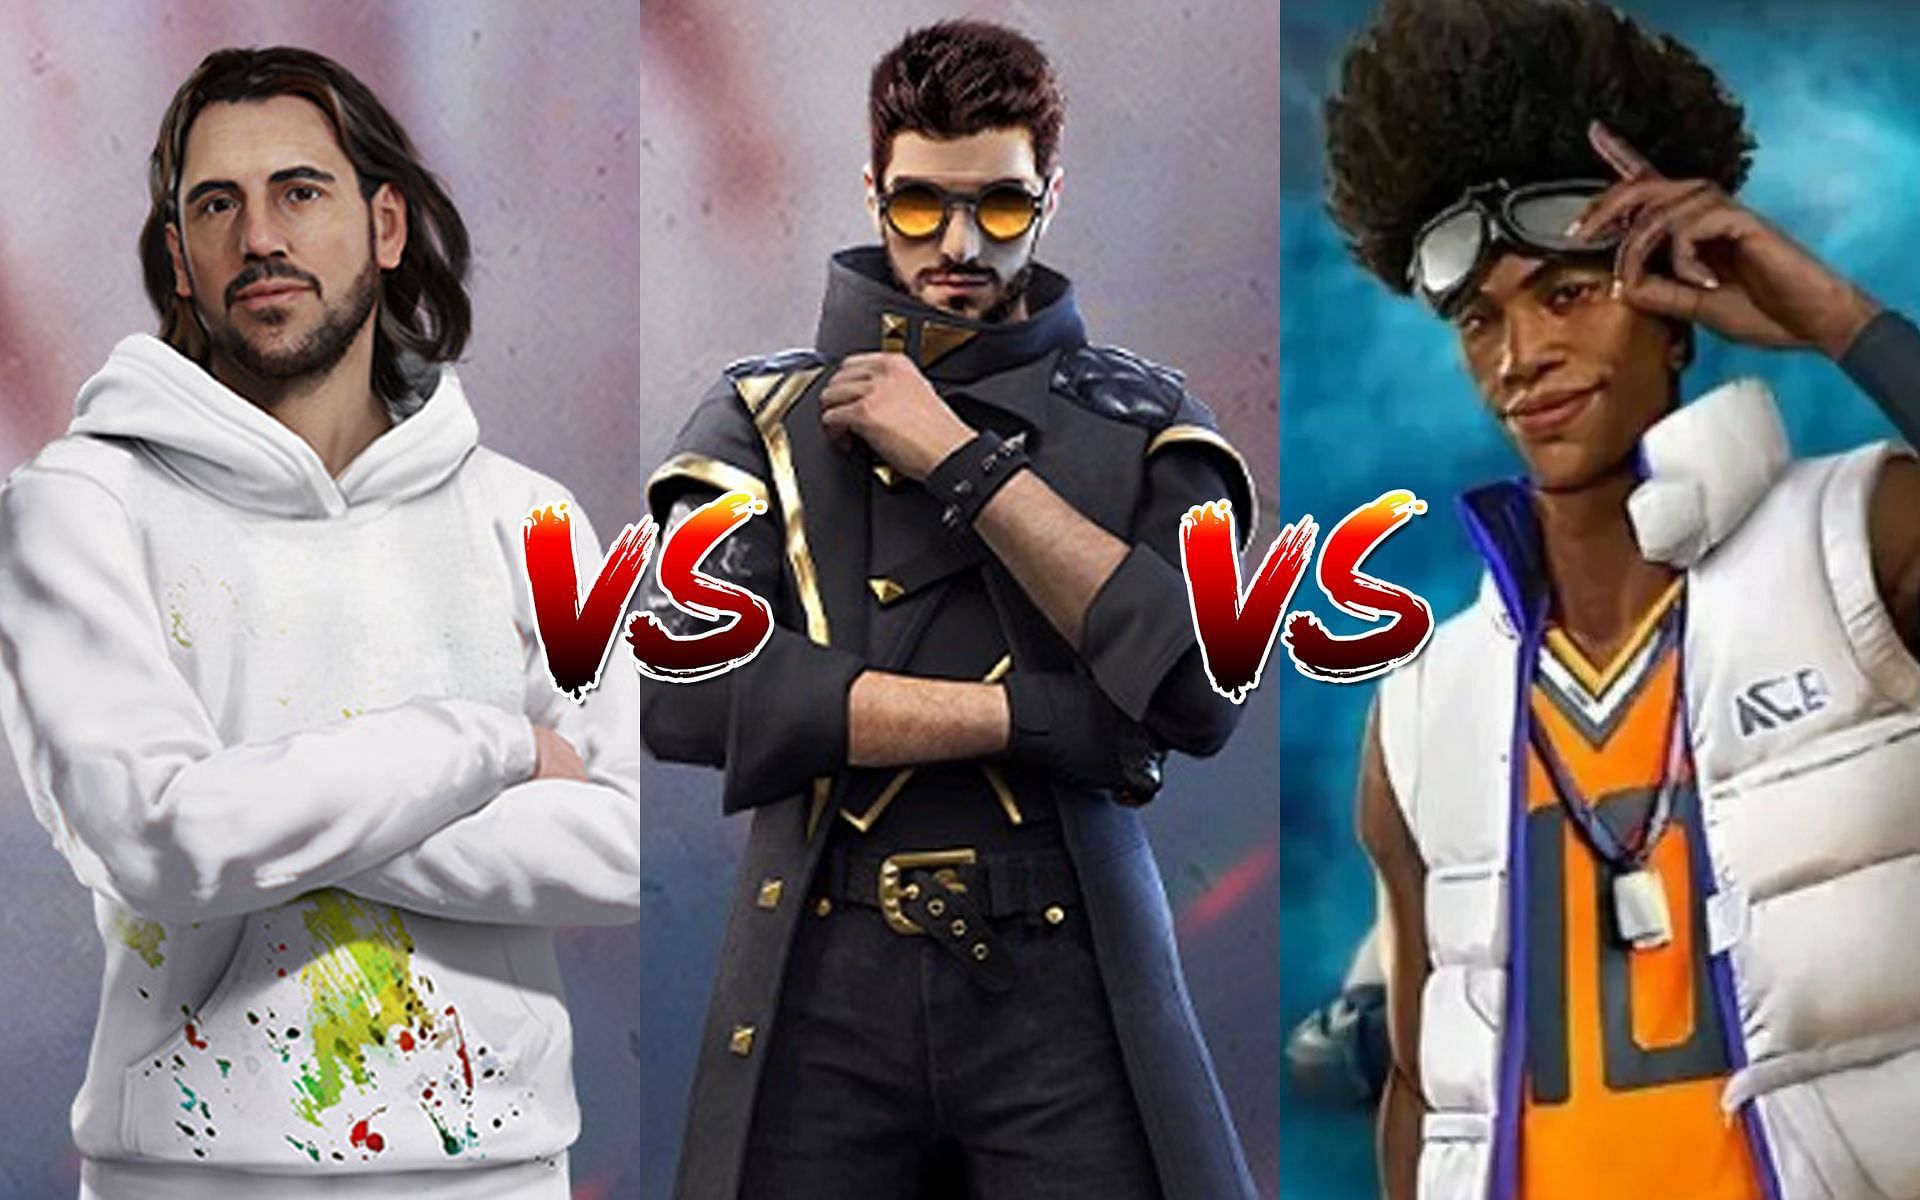 Dimitri vs DJ Alok vs Leon: Which character is better for ranked matches? (Image via Sportskeeda)